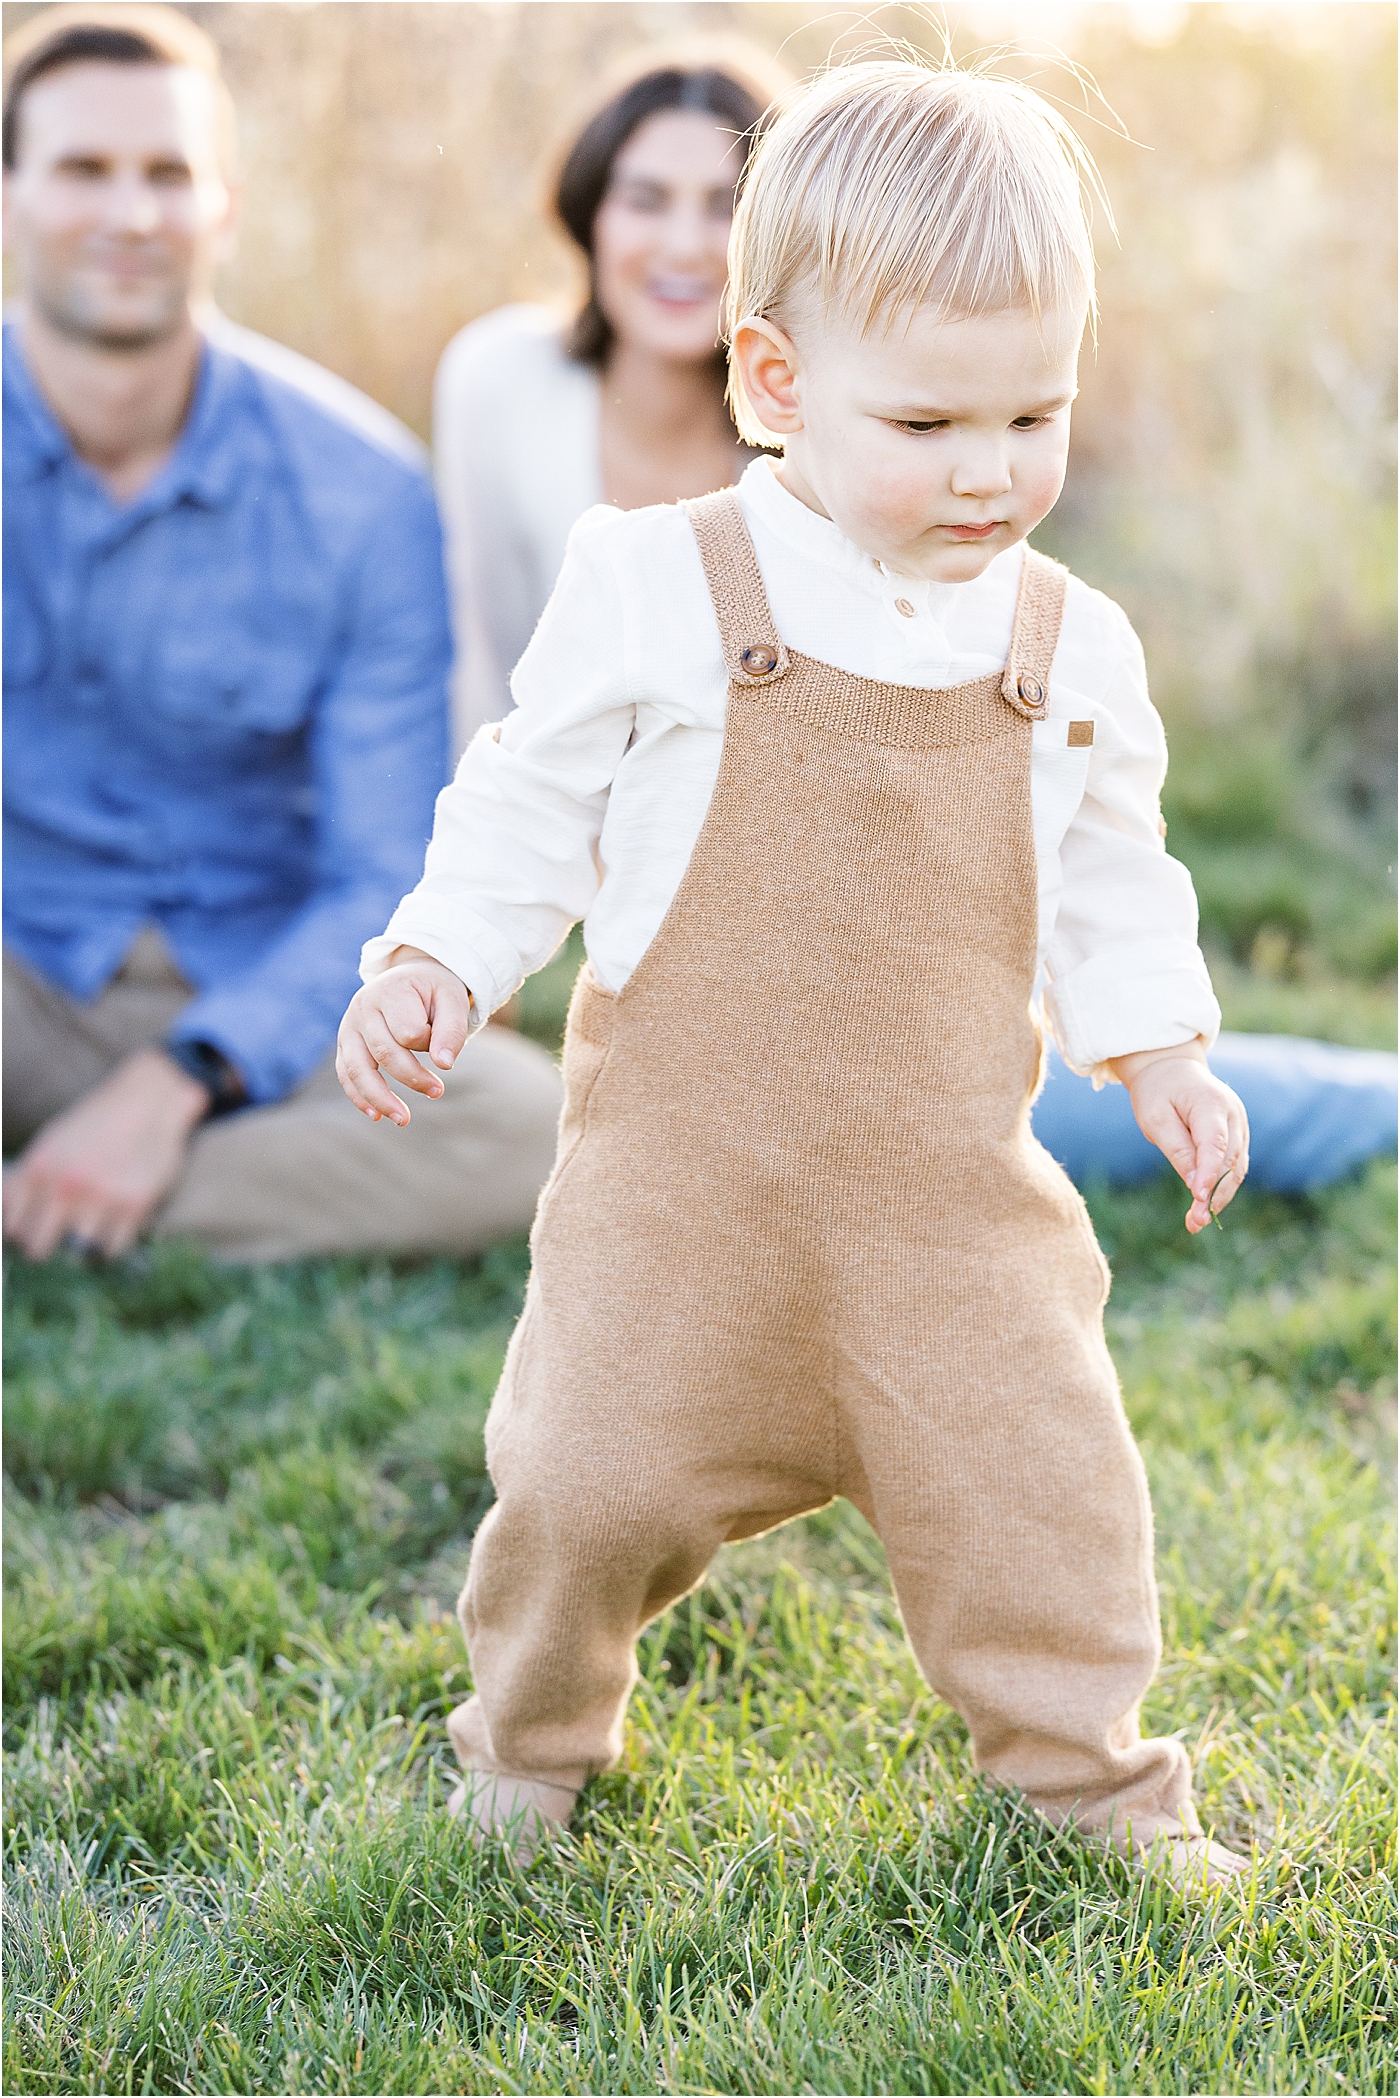 Toddler walking in front of parents | Lindsay Konopa Photography